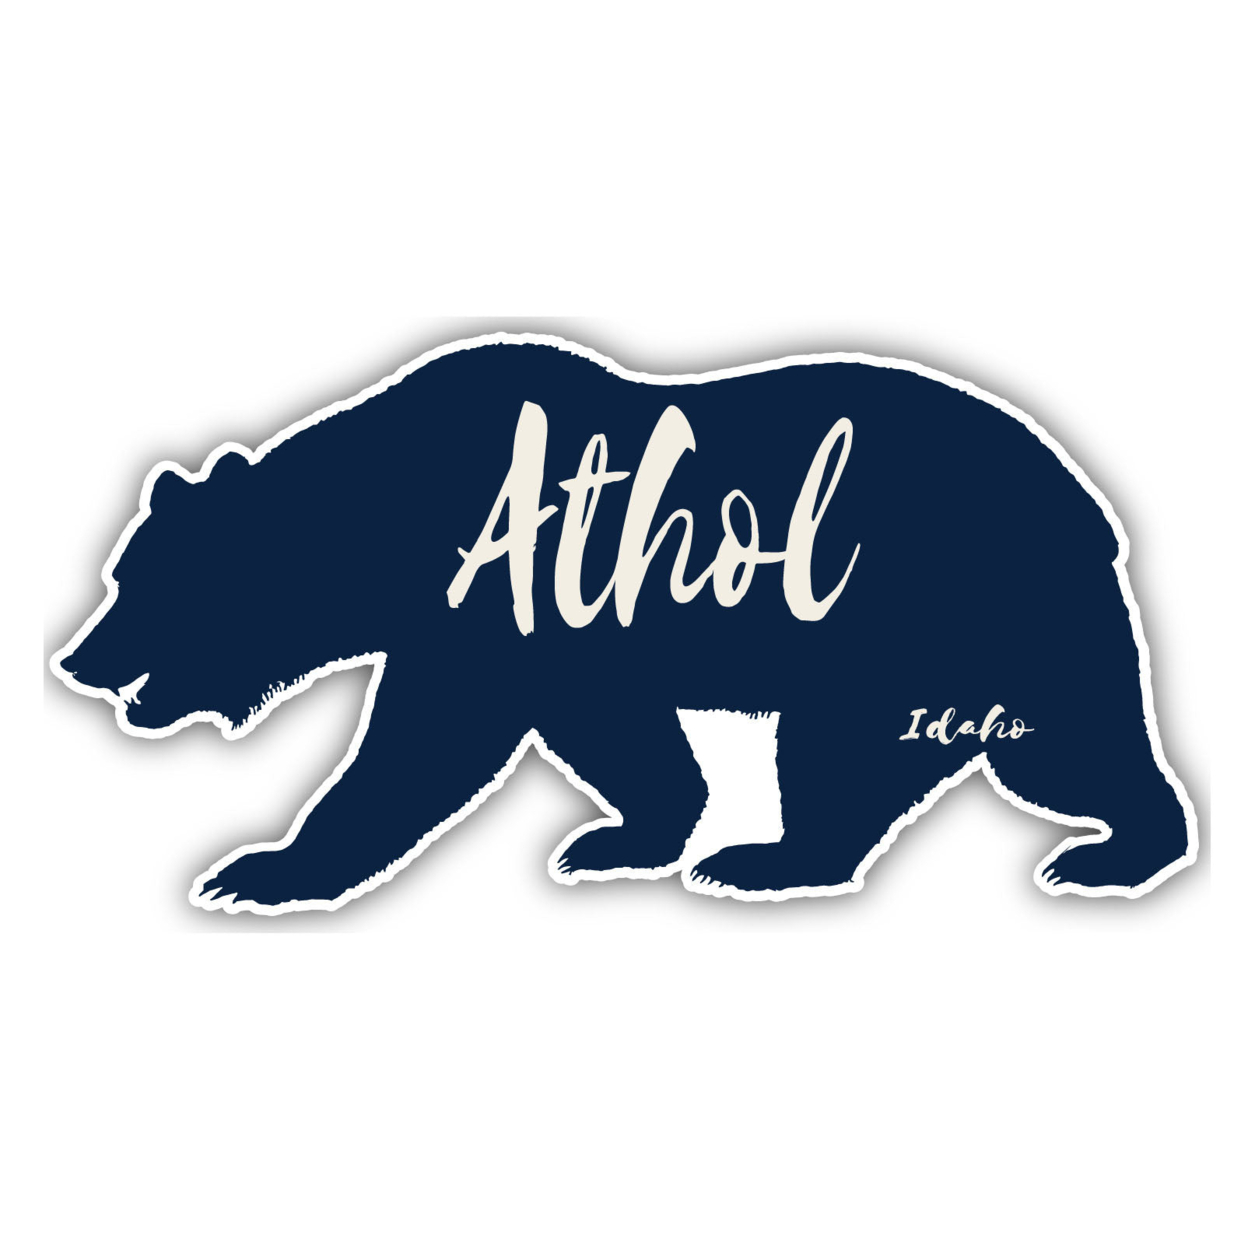 Athol Idaho Souvenir Decorative Stickers (Choose Theme And Size) - Single Unit, 2-Inch, Bear